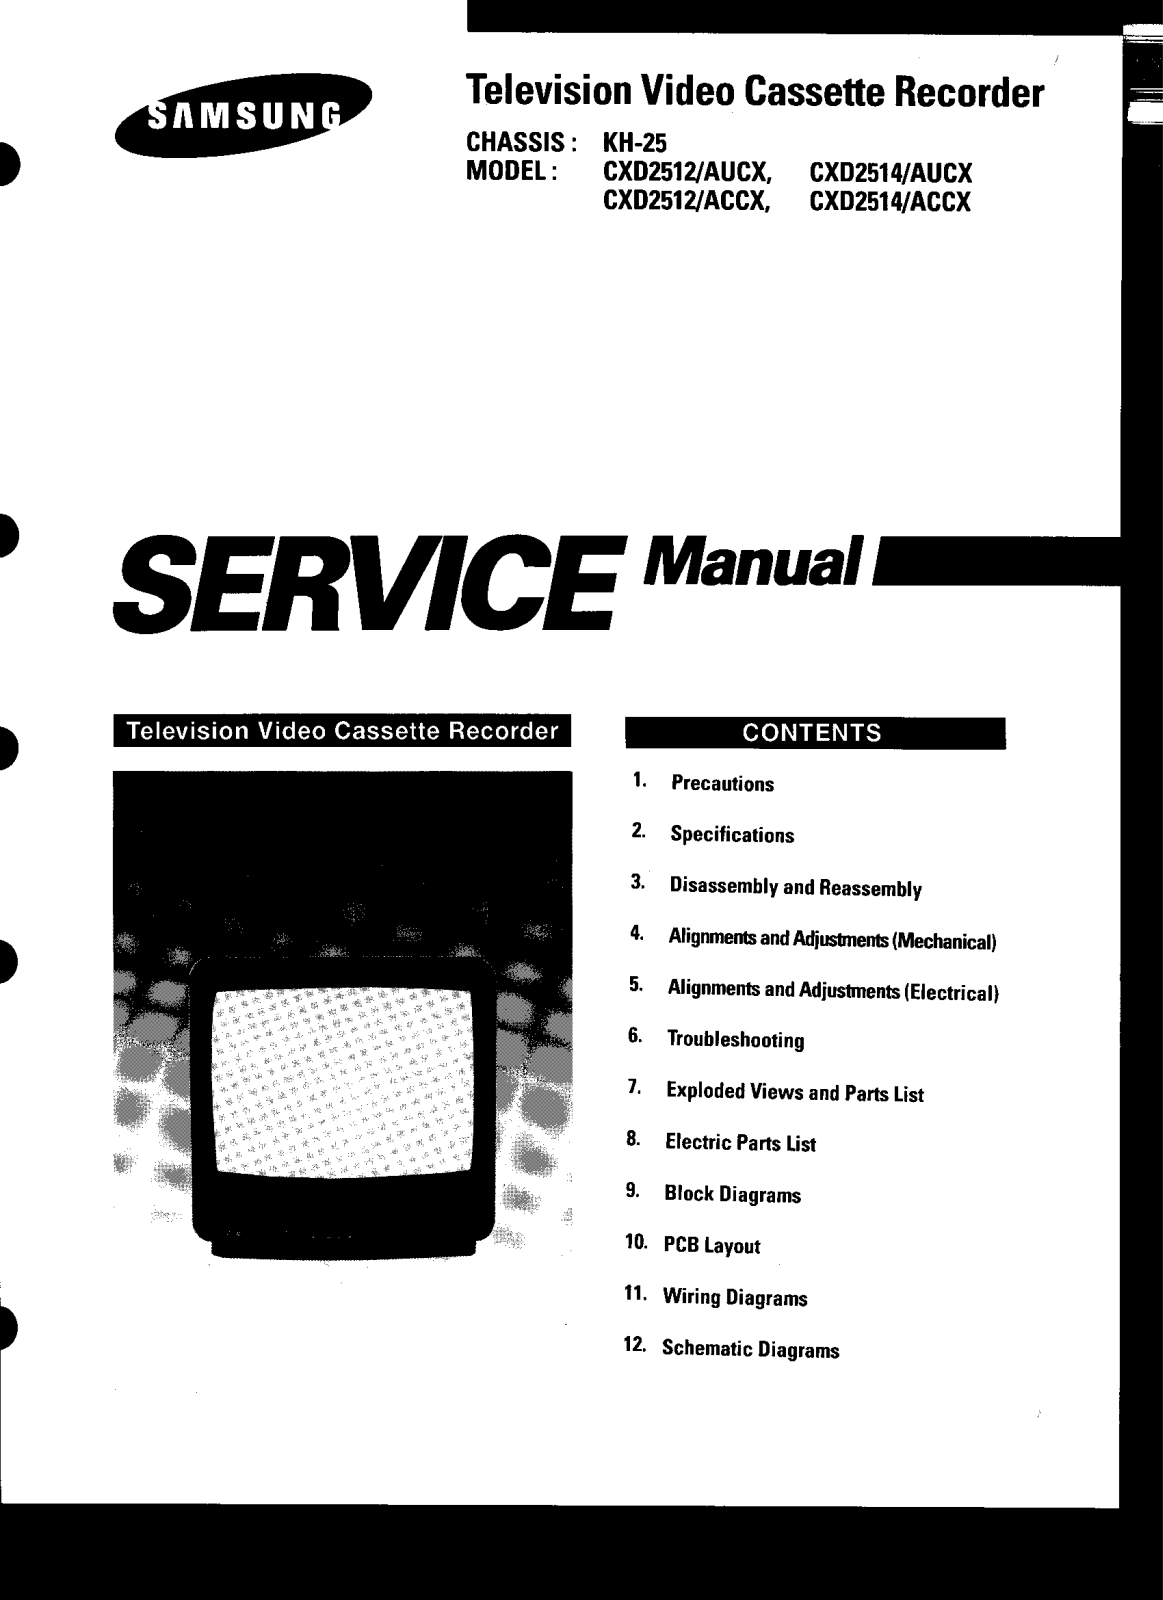 SAMSUNG cxd2512-aucx, cxd2512-accx, cxd2514-aucx, cxd2514-accx Service Manual